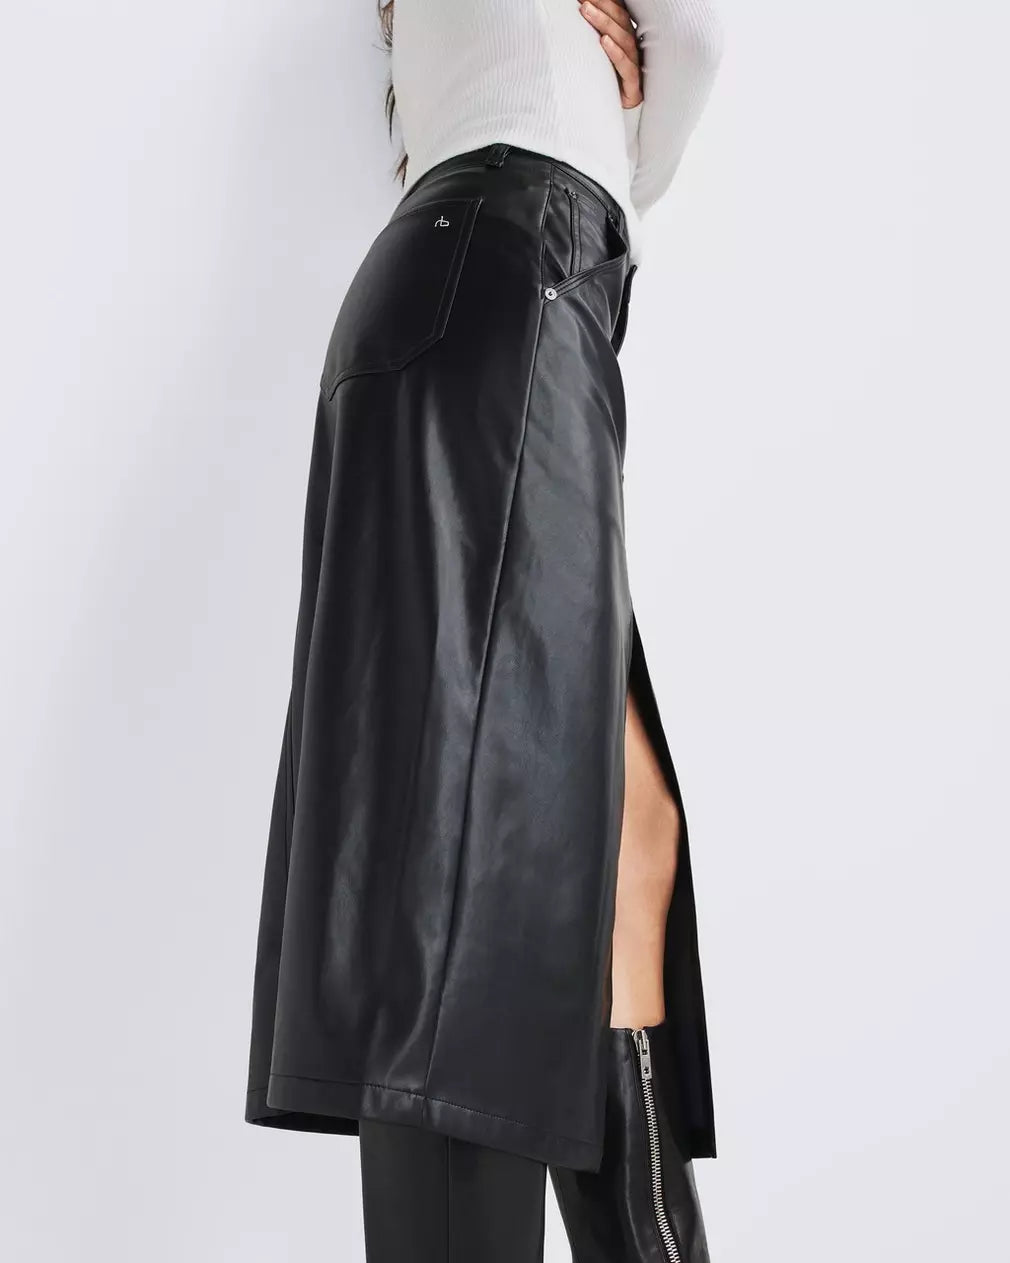 Rag & Bone - Black Sid Faux Leather Midi Skirt